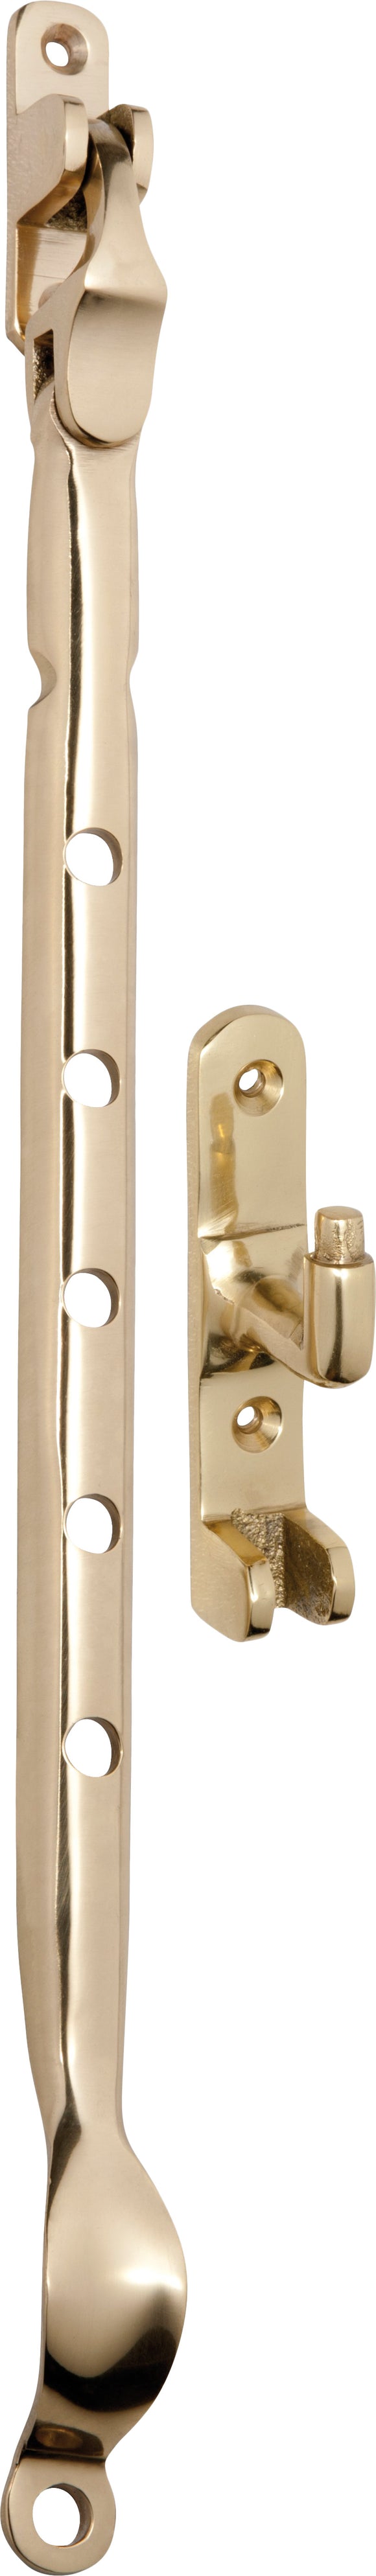 Casement Stay Sidemount Polished Brass L300mm